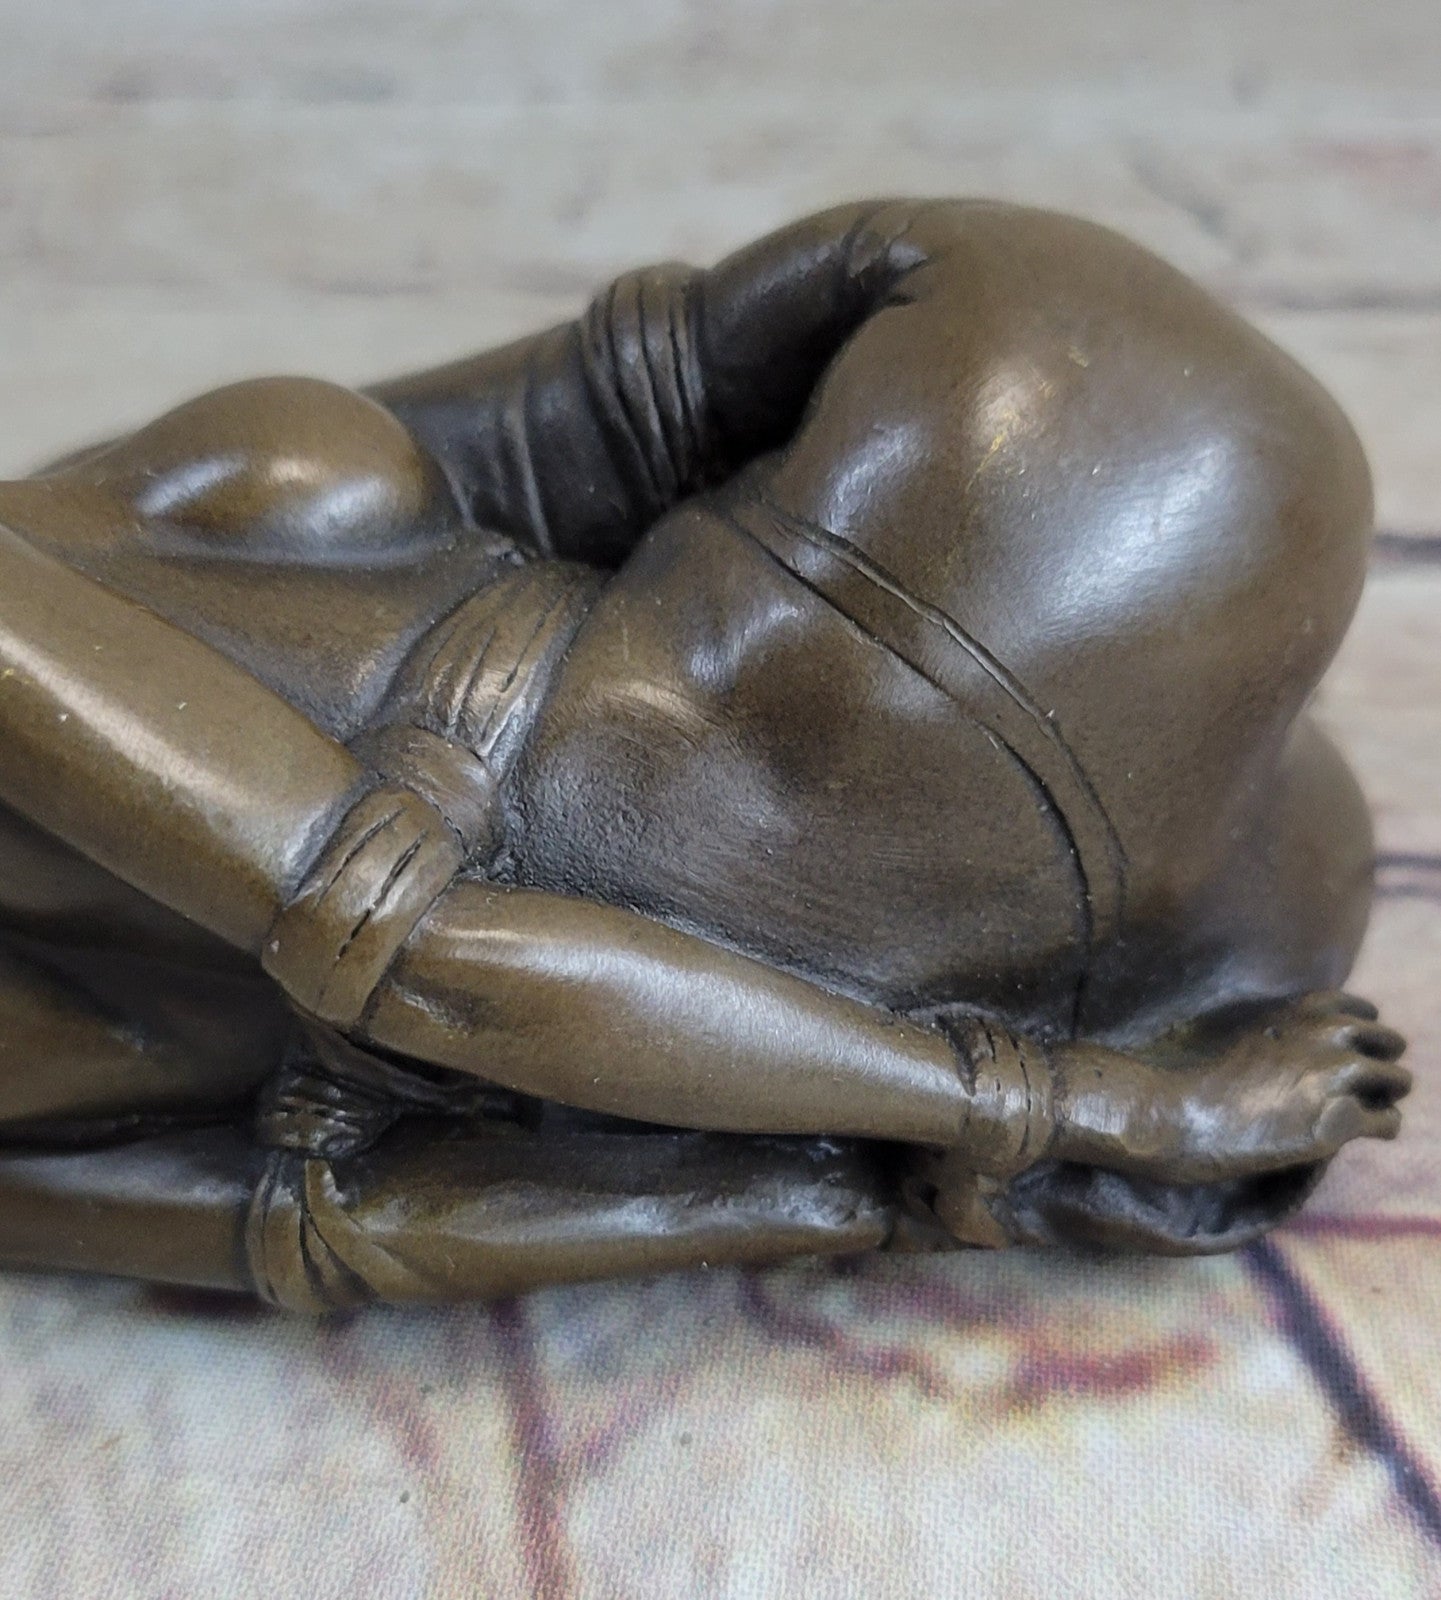 Bondage Girl Chantal - Erotische Sex-Bronze - signiert Original Milo Sculpture